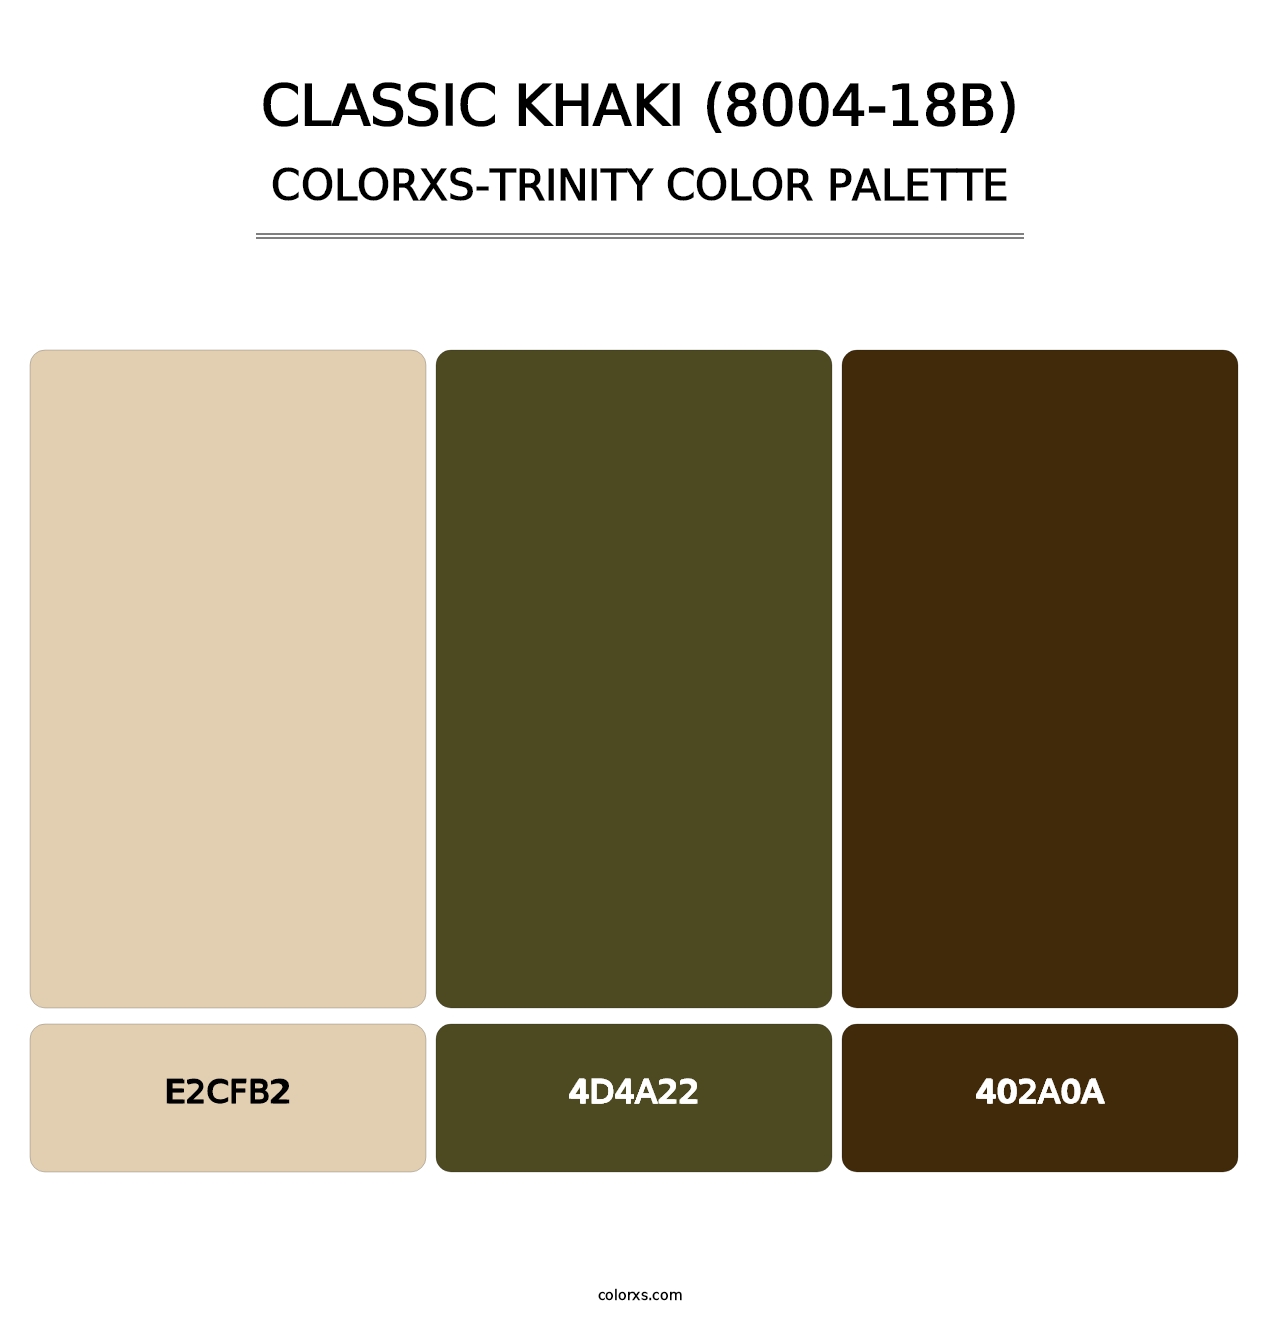 Classic Khaki (8004-18B) - Colorxs Trinity Palette